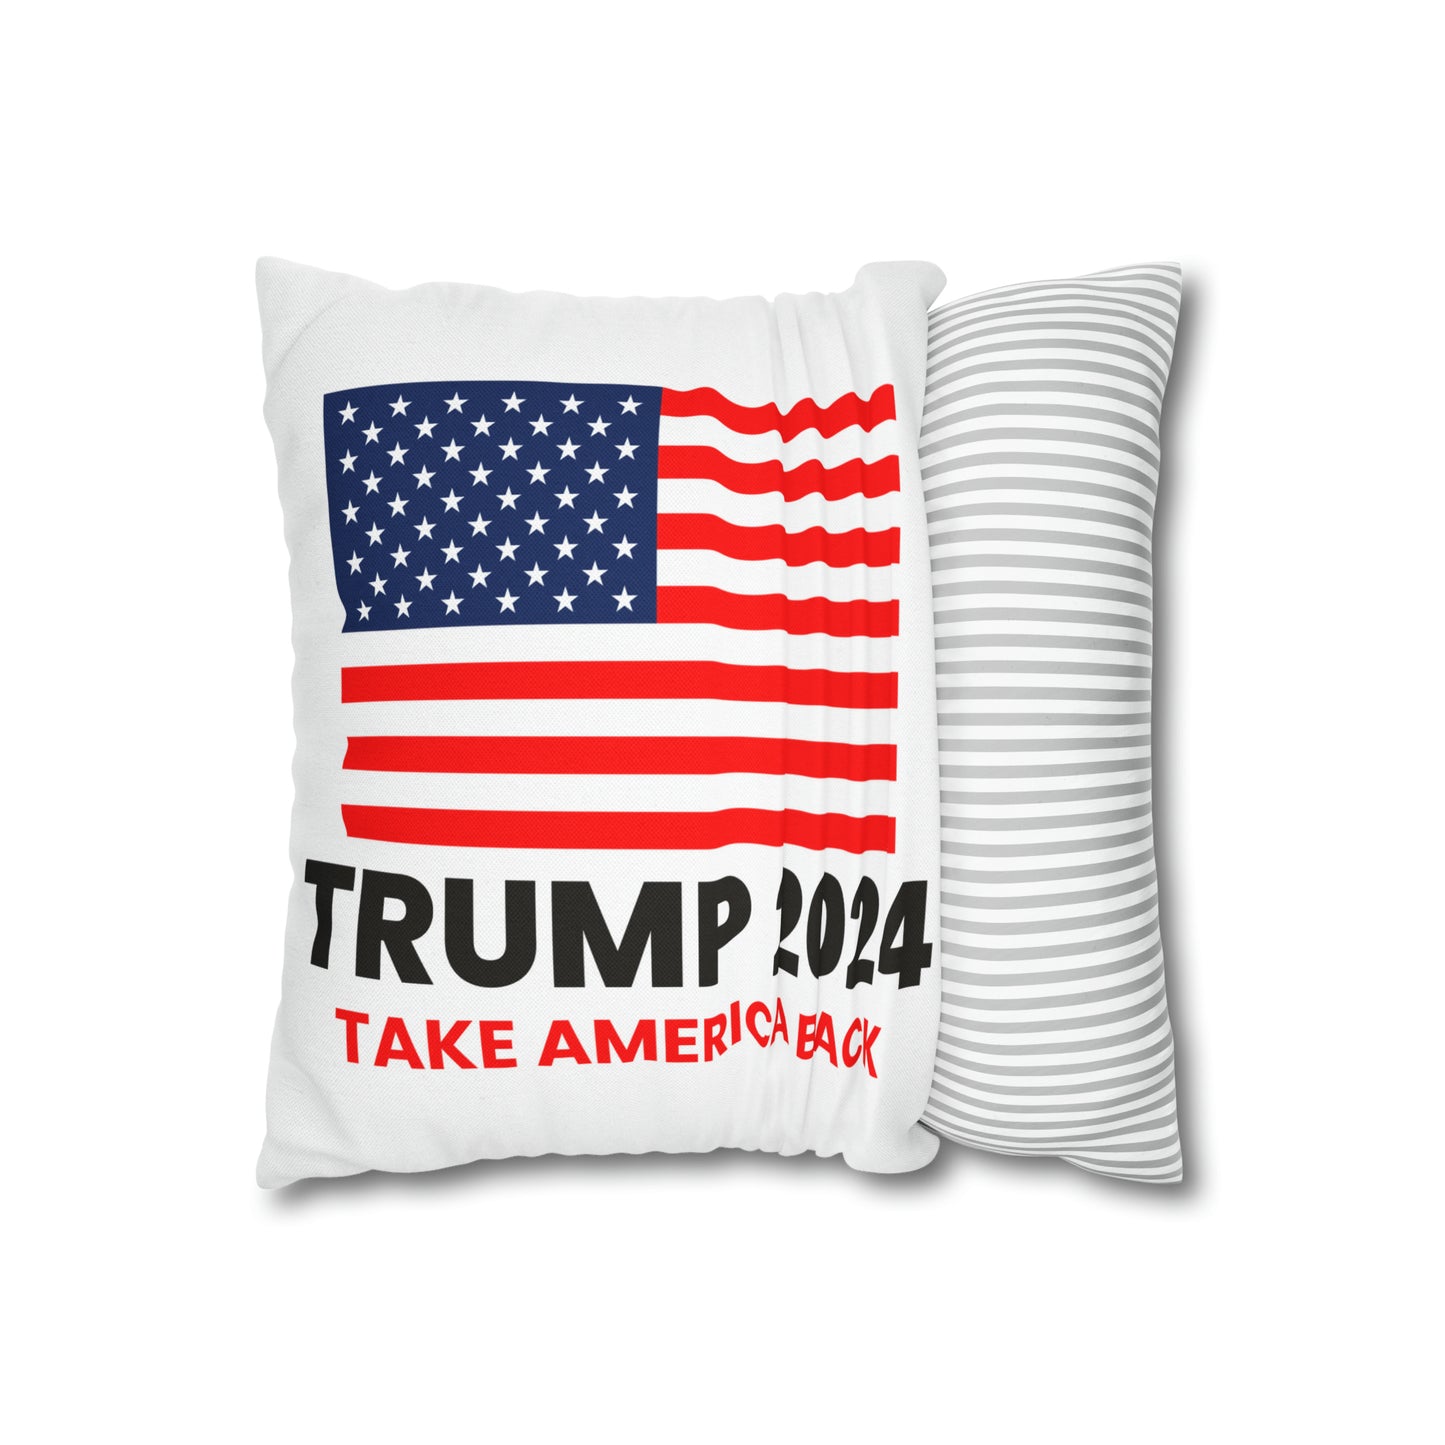 Trump 2024 Take America Back Throw Pillow Case